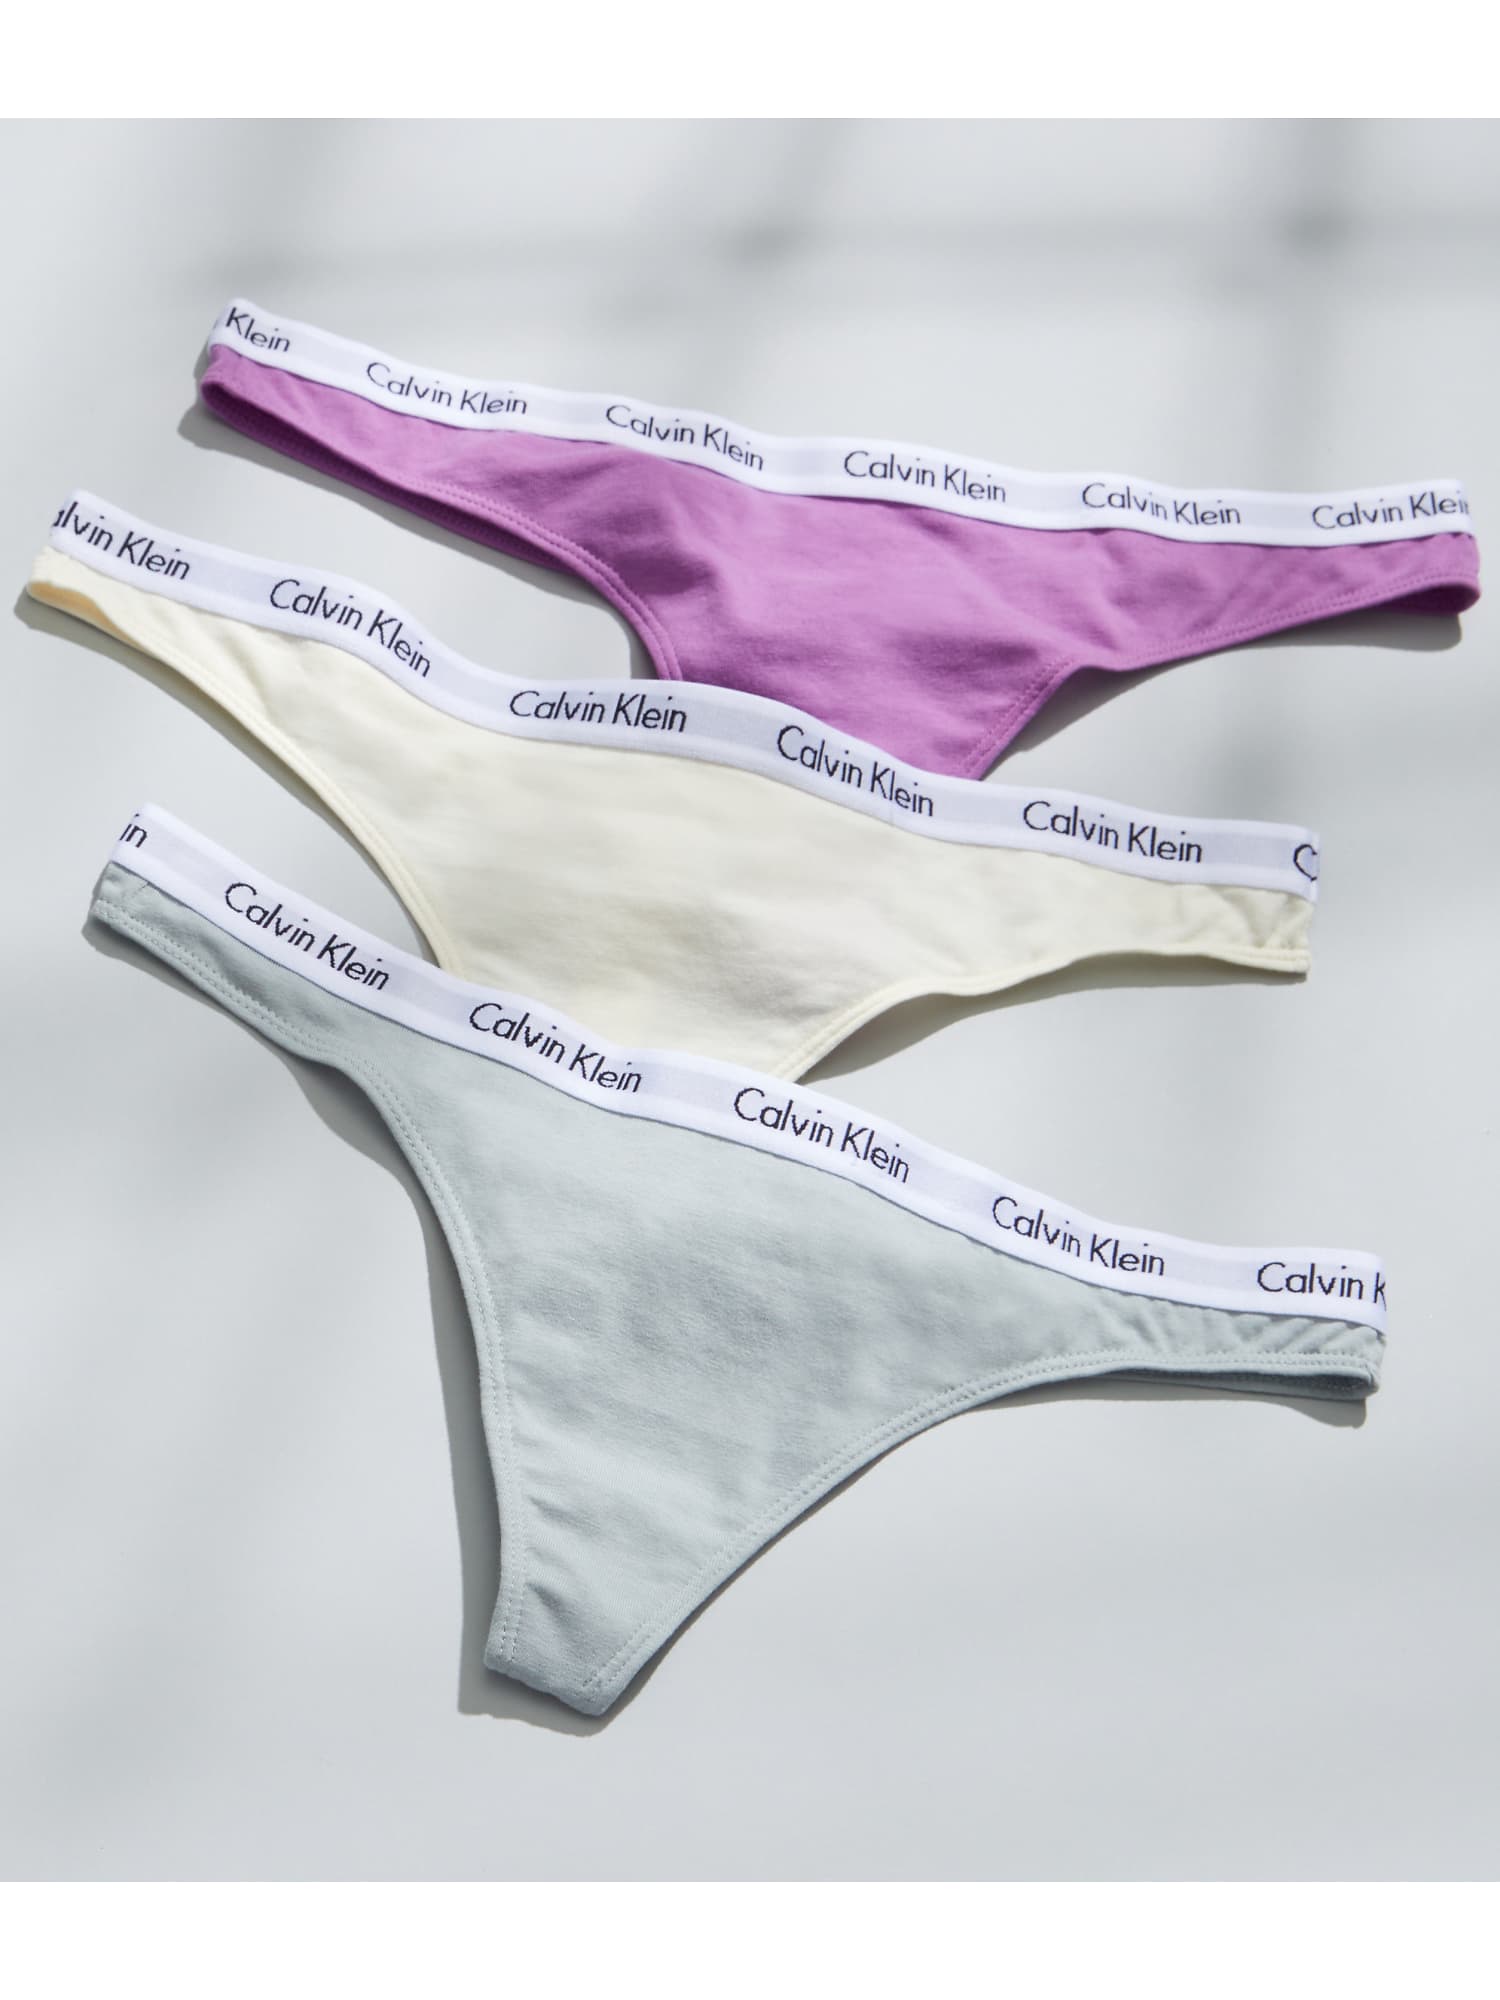 Calvin Klein Carousel Thong 3-Pack - Women's